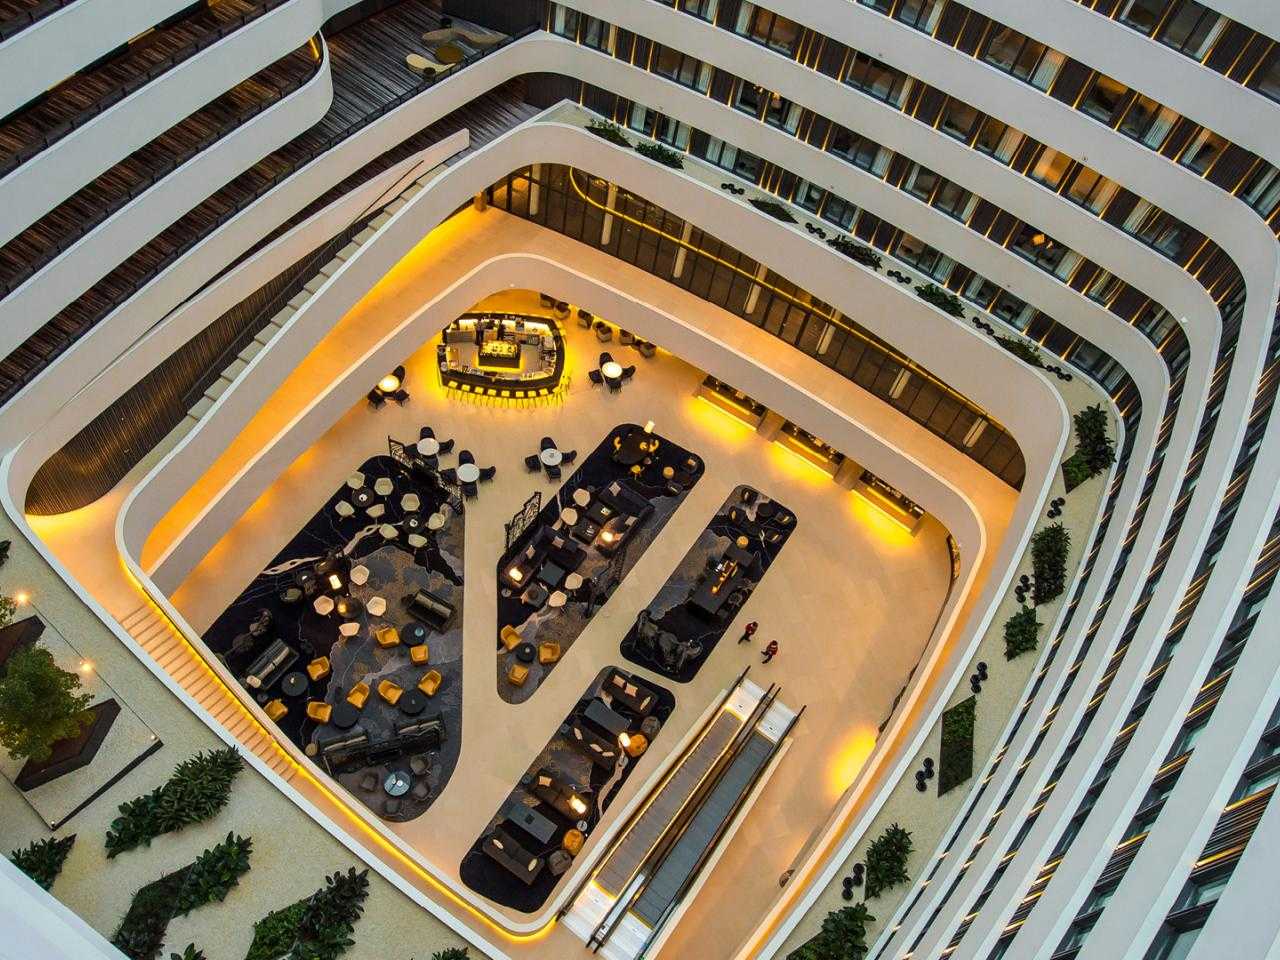 Lobby Hilton Hotel vanaf bovenaf gezien